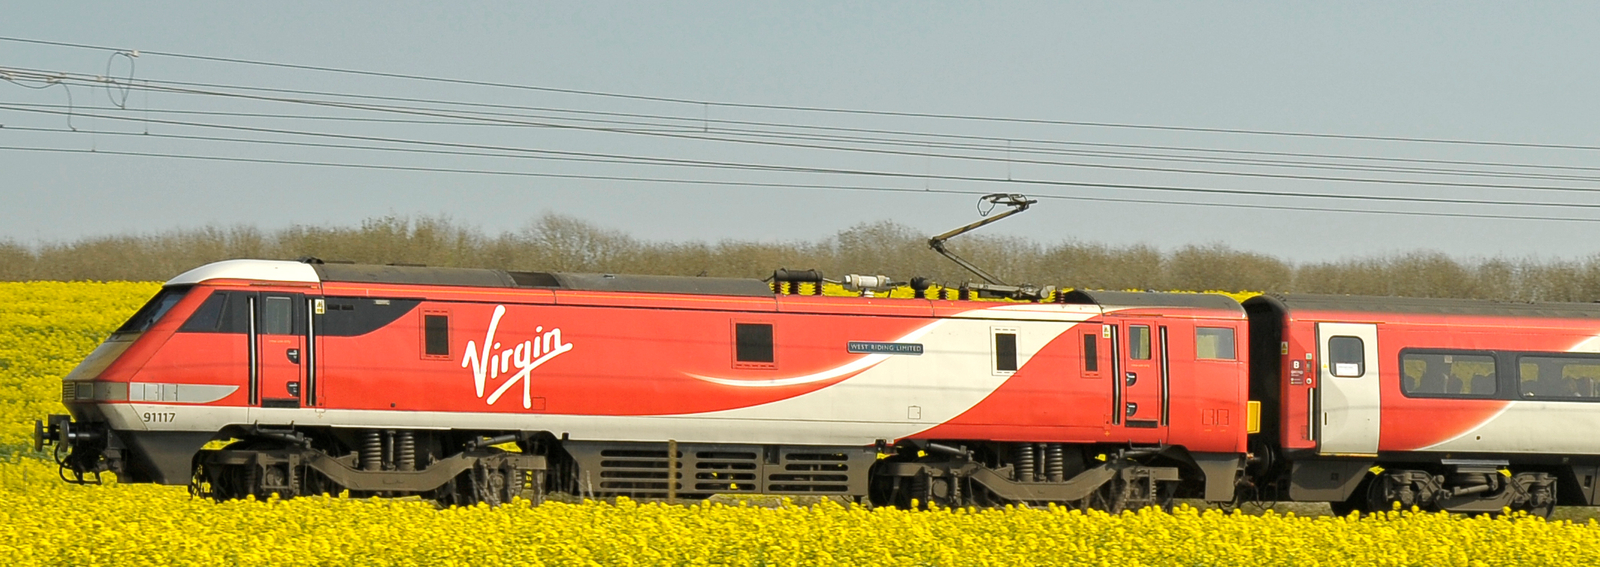 Virgin Trains East Coast 91117 in Nottinghamshire in April 2017